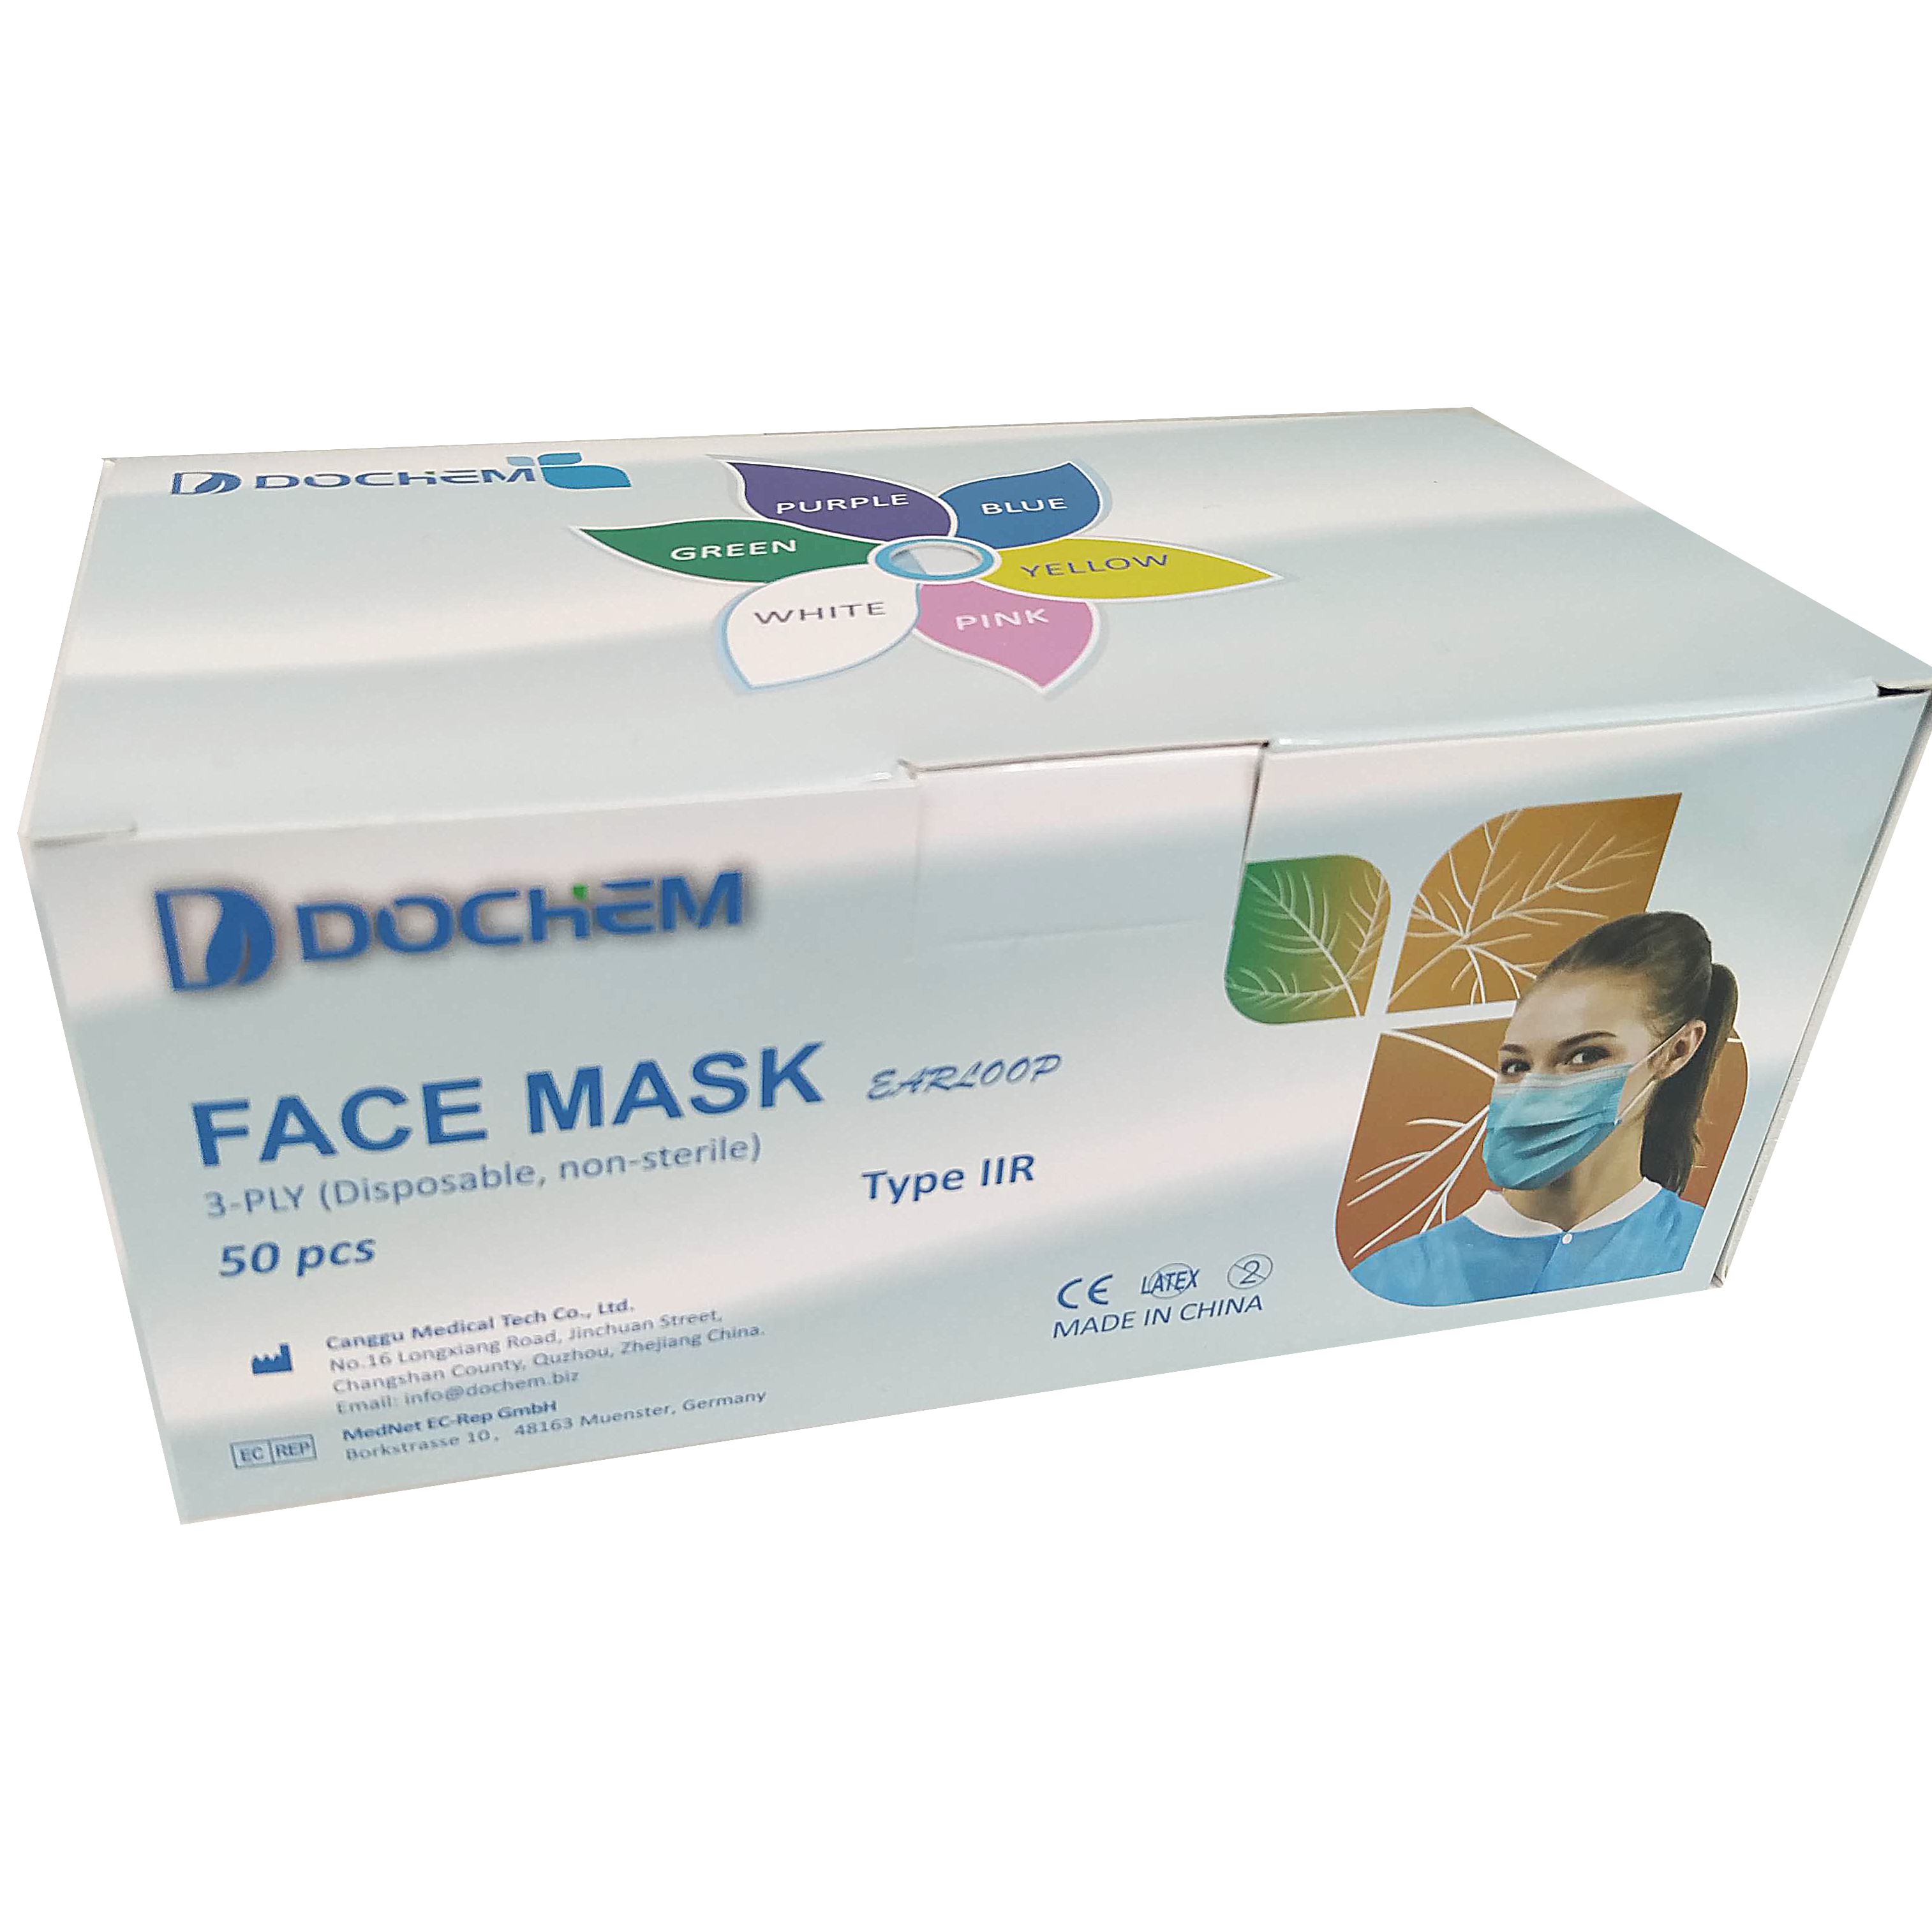 Face Mask, Type IIR, 50 pcs, 3 ply, earloop, in 2 colors